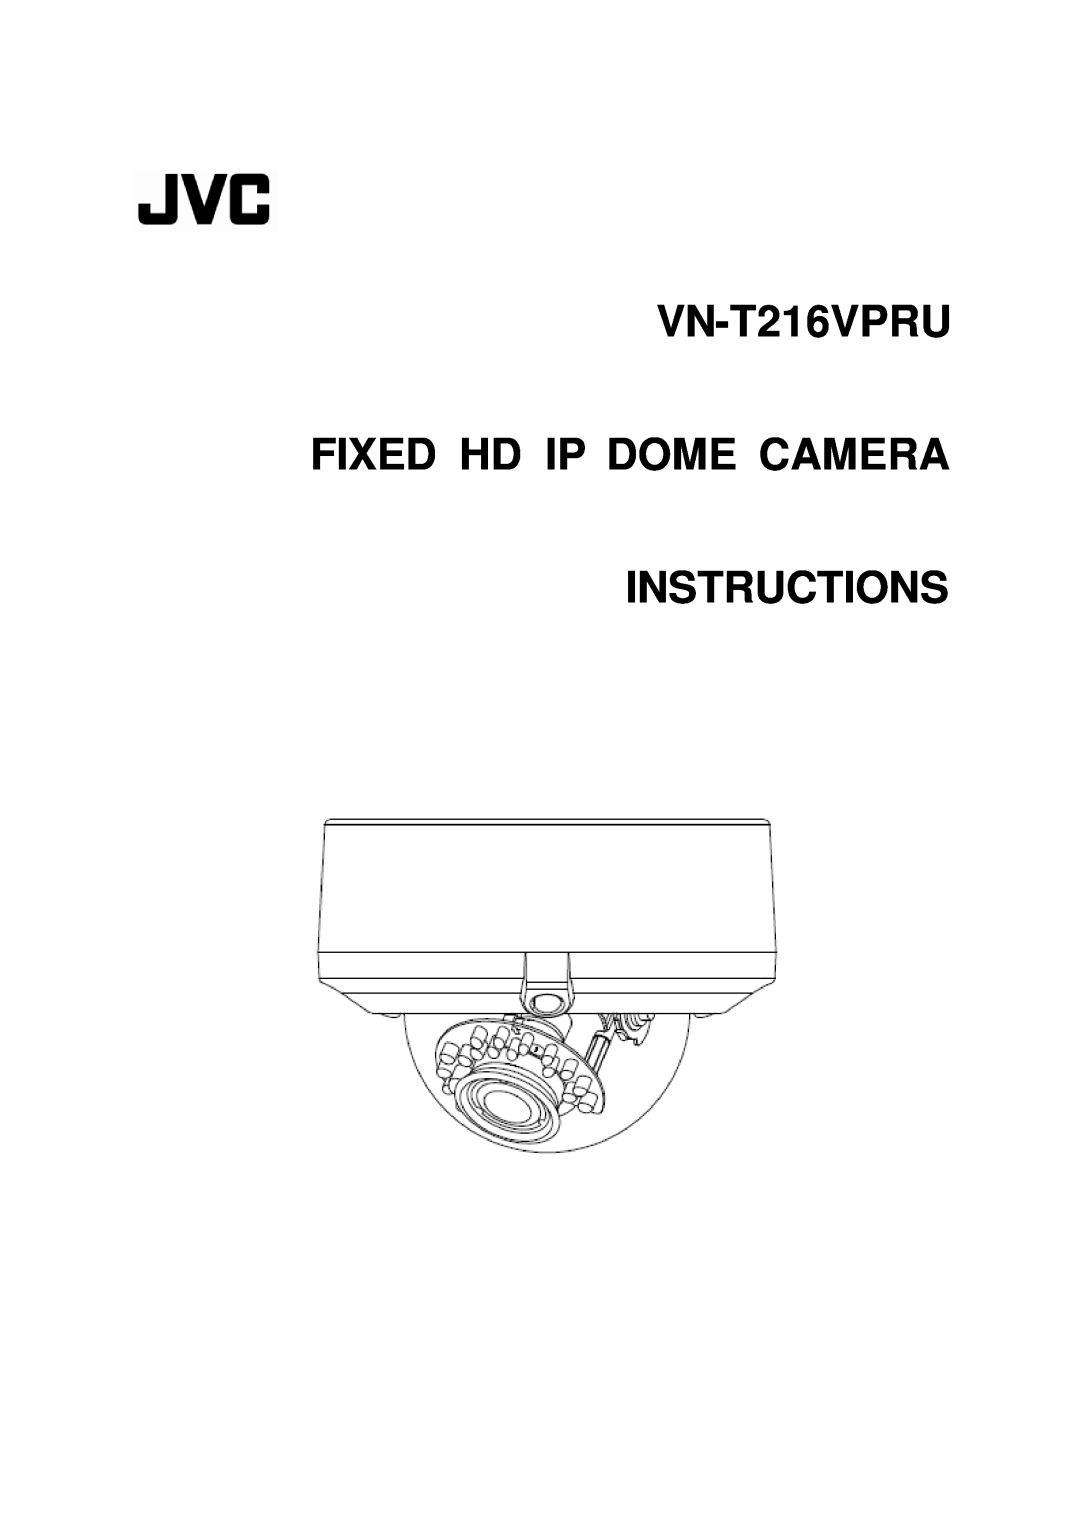 JVC manual VN-T216VPRU FIXED HD IP DOME CAMERA INSTRUCTIONS 